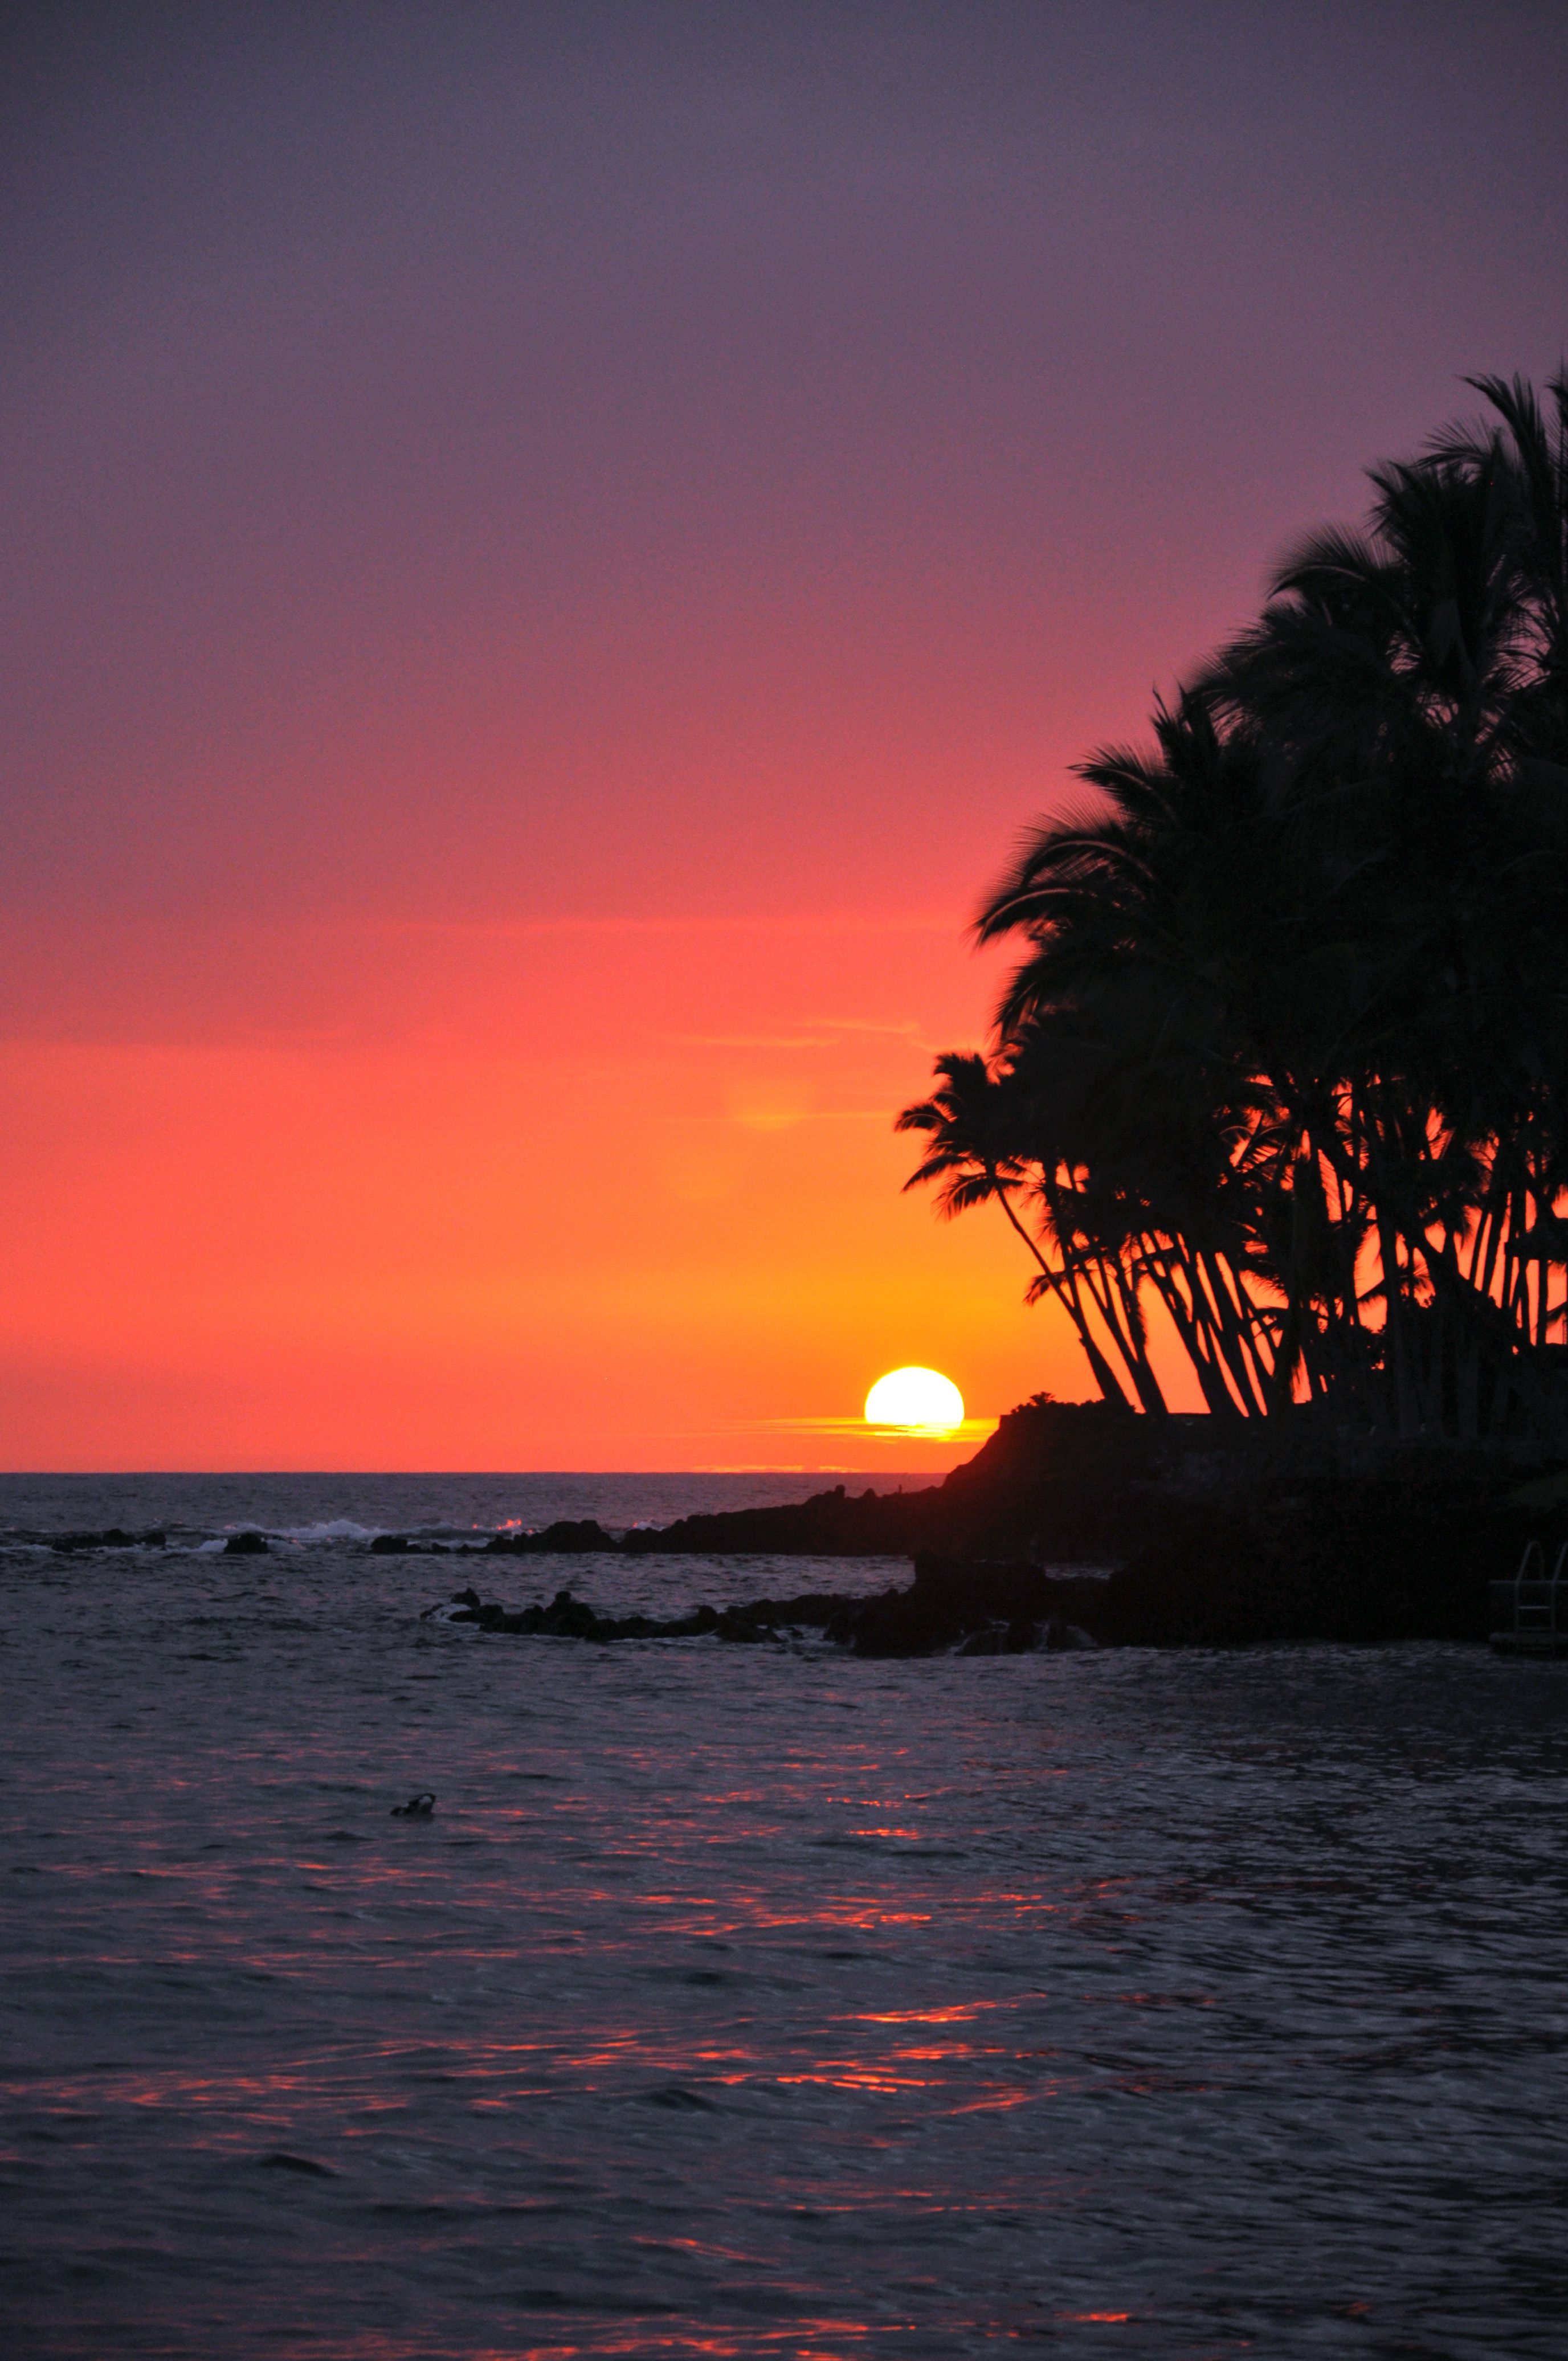 Big Island Sunset, Hawaii. Sunset iphone wallpaper, Sunset picture, iPhone wallpaper sky